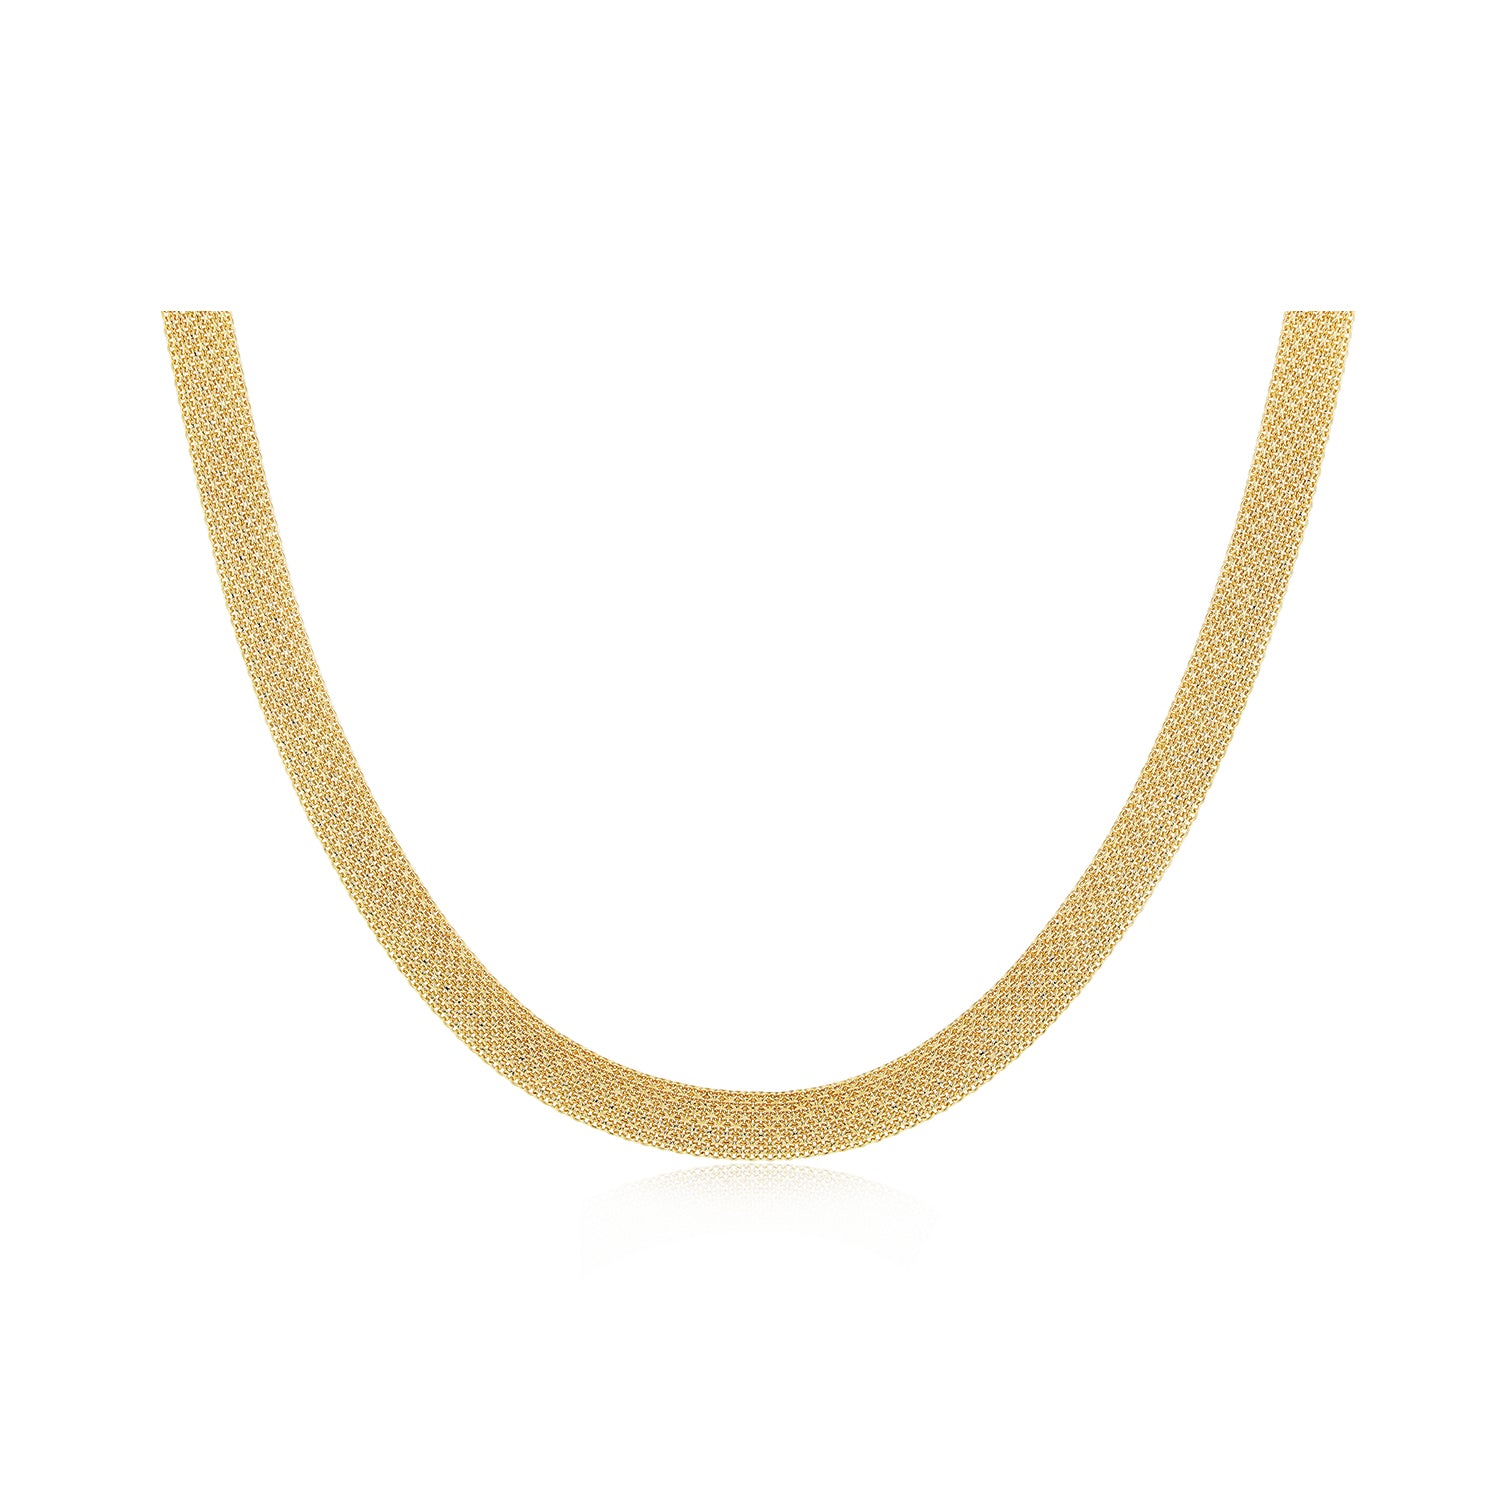 Gold Mesh Necklace, 14k Gold